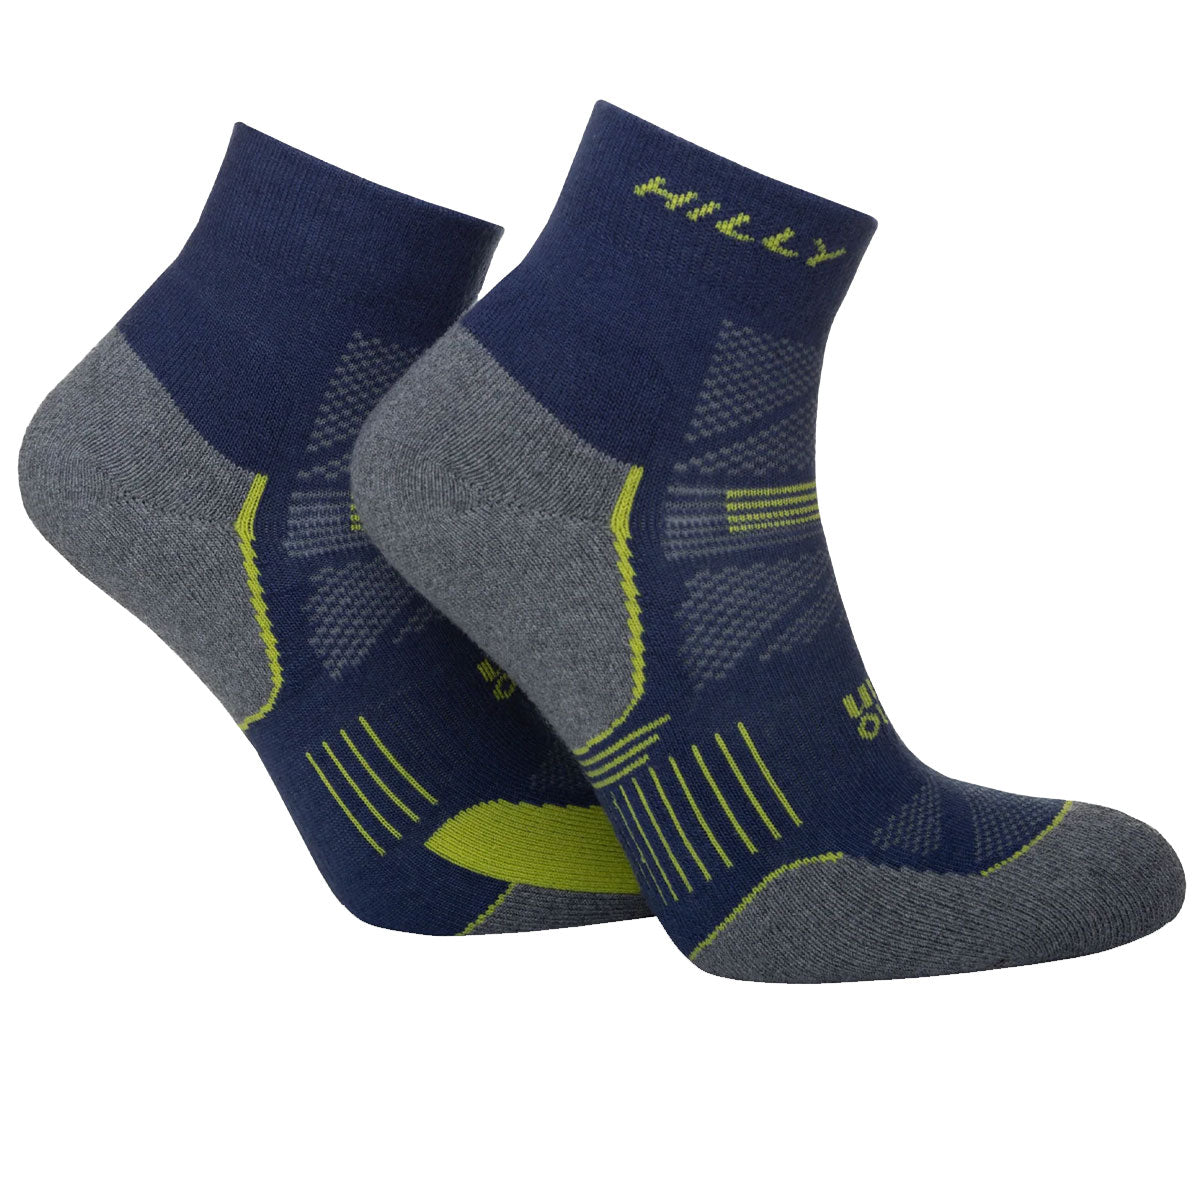 Hilly Supreme Anklet Med Socks - Mens - Midnight Navy/Grey Marl